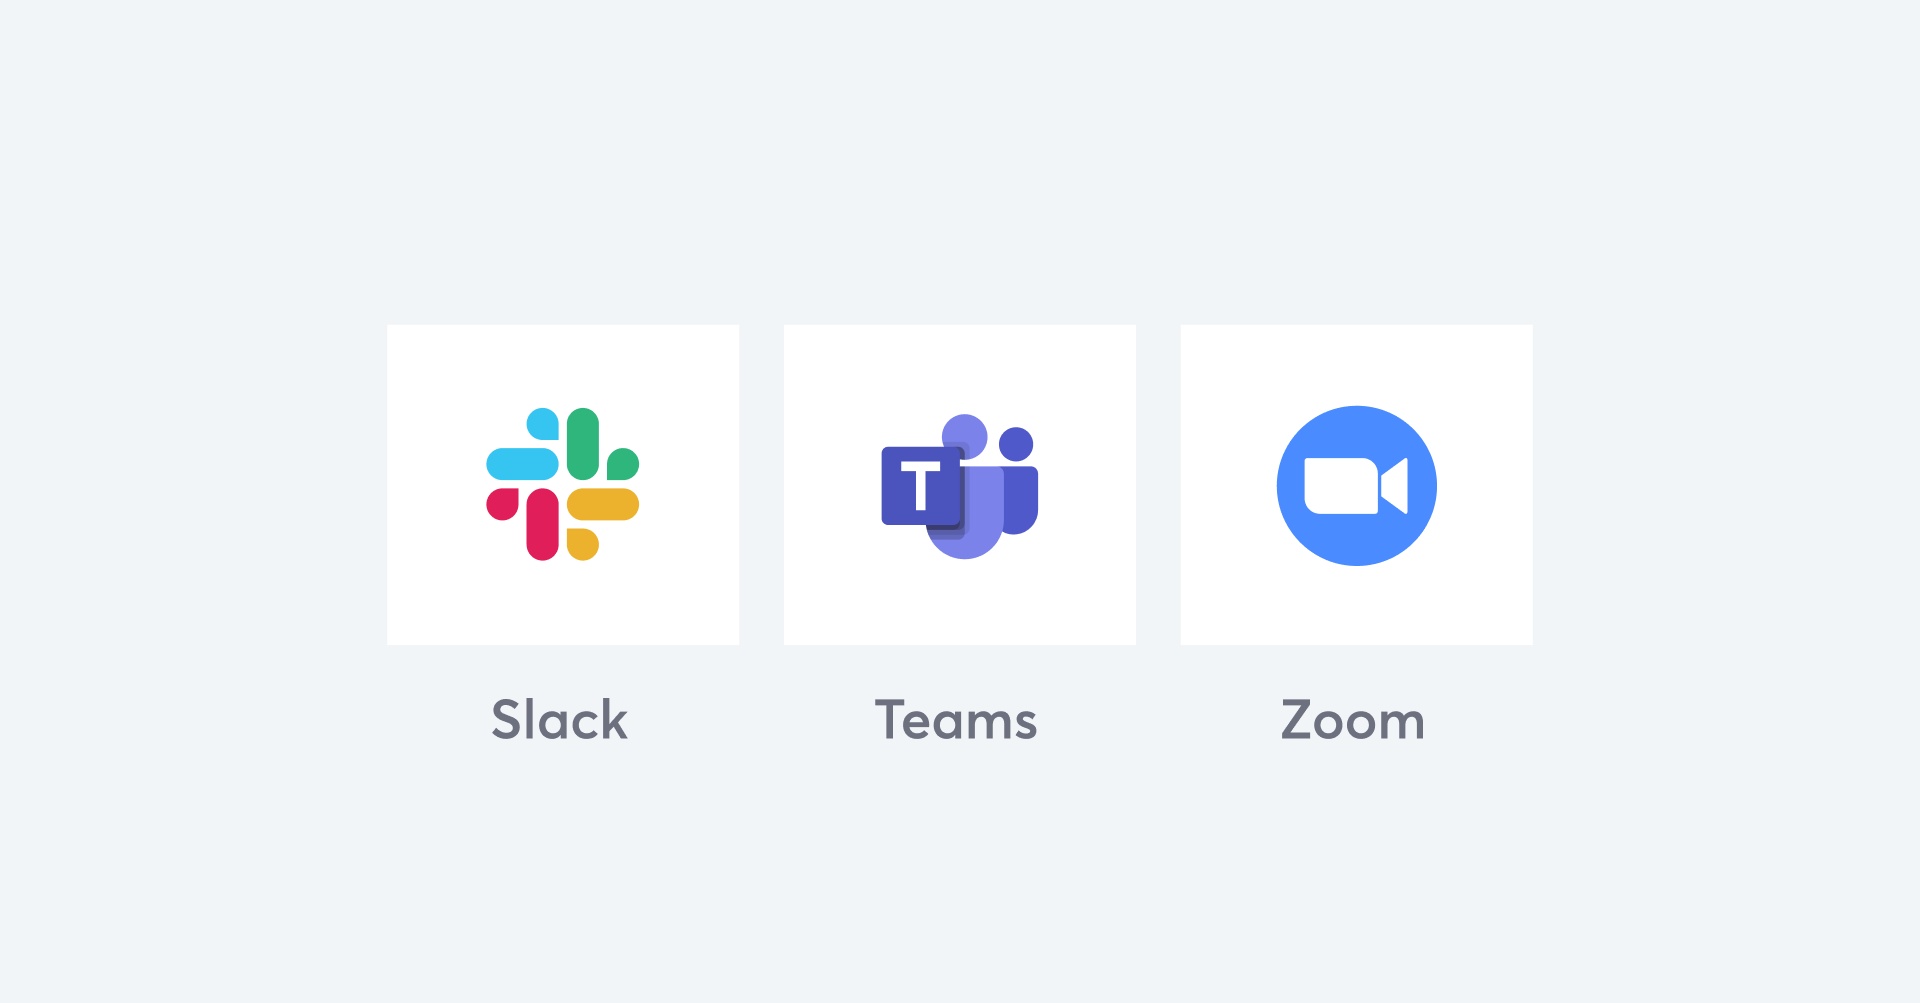 Slack, Microsoft Teams, and Zoom logos on a light grey background